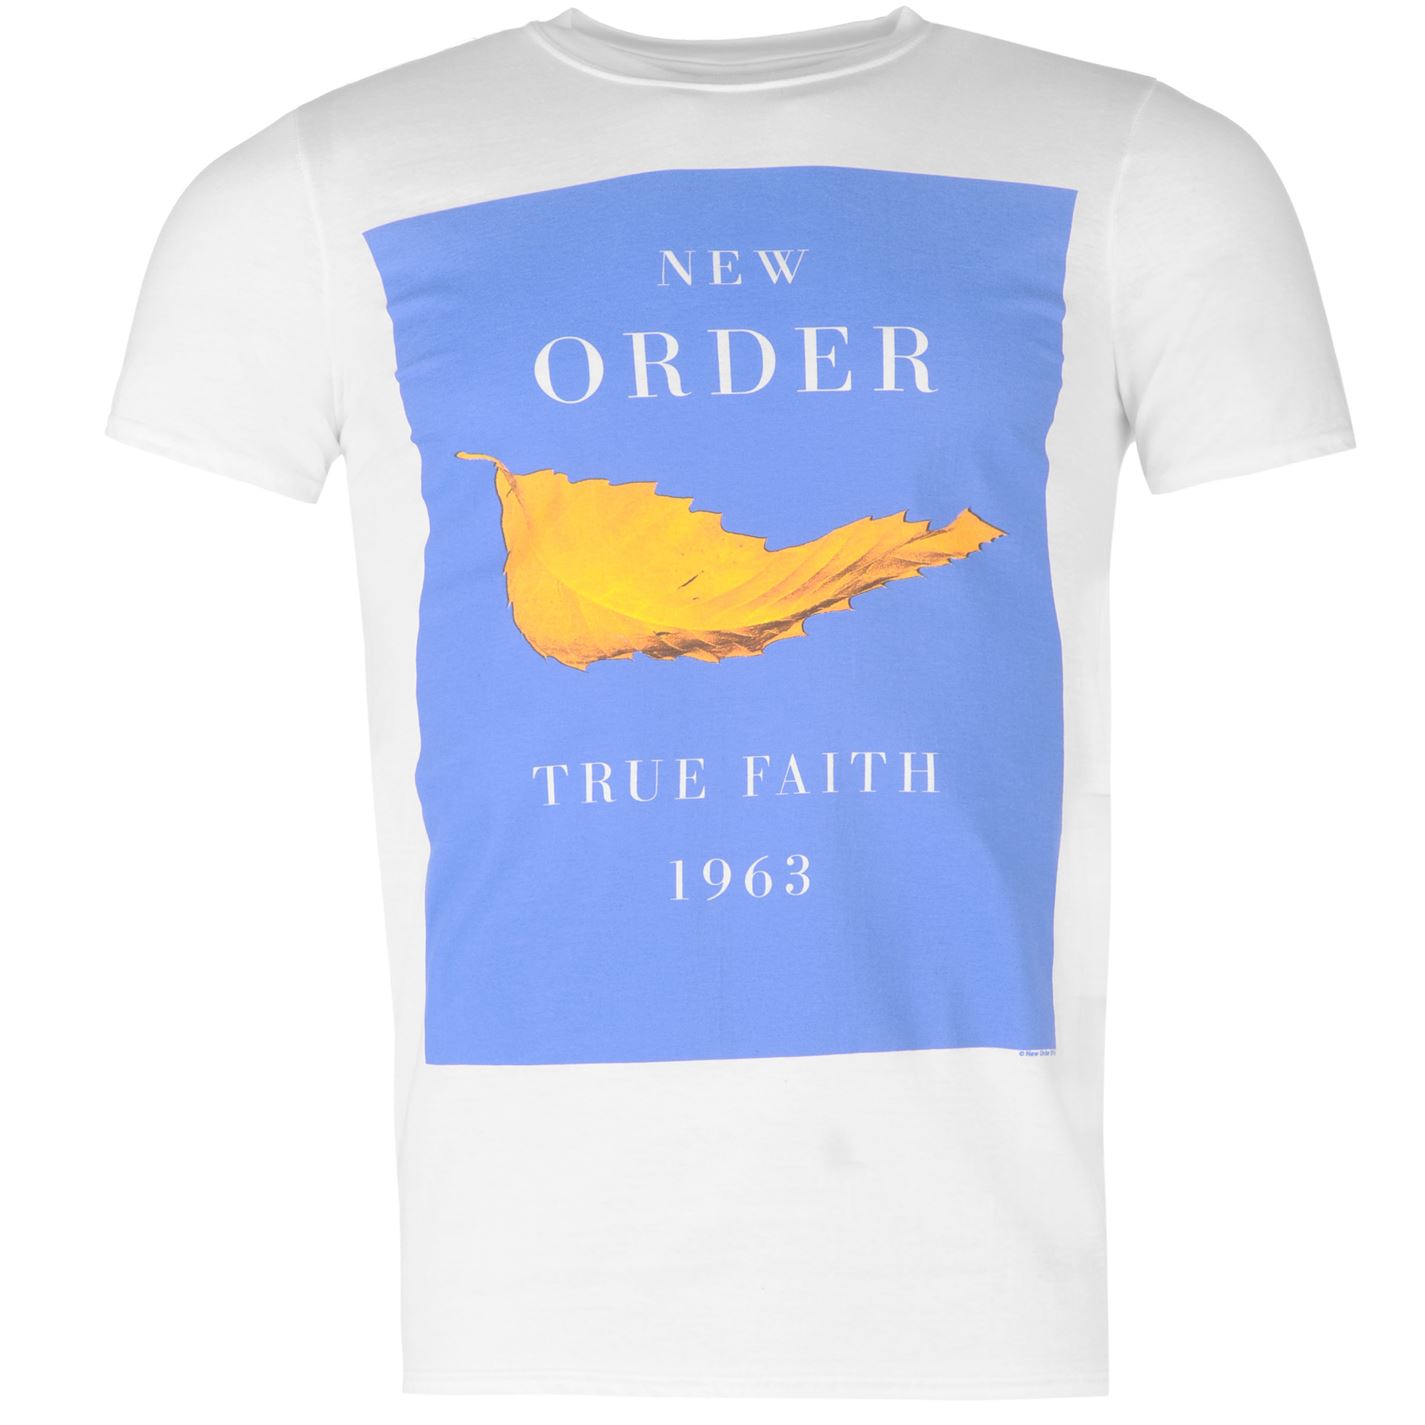 True faith new. Футболка New order. Майка с New order. Футболка true Faith. New order true Faith.